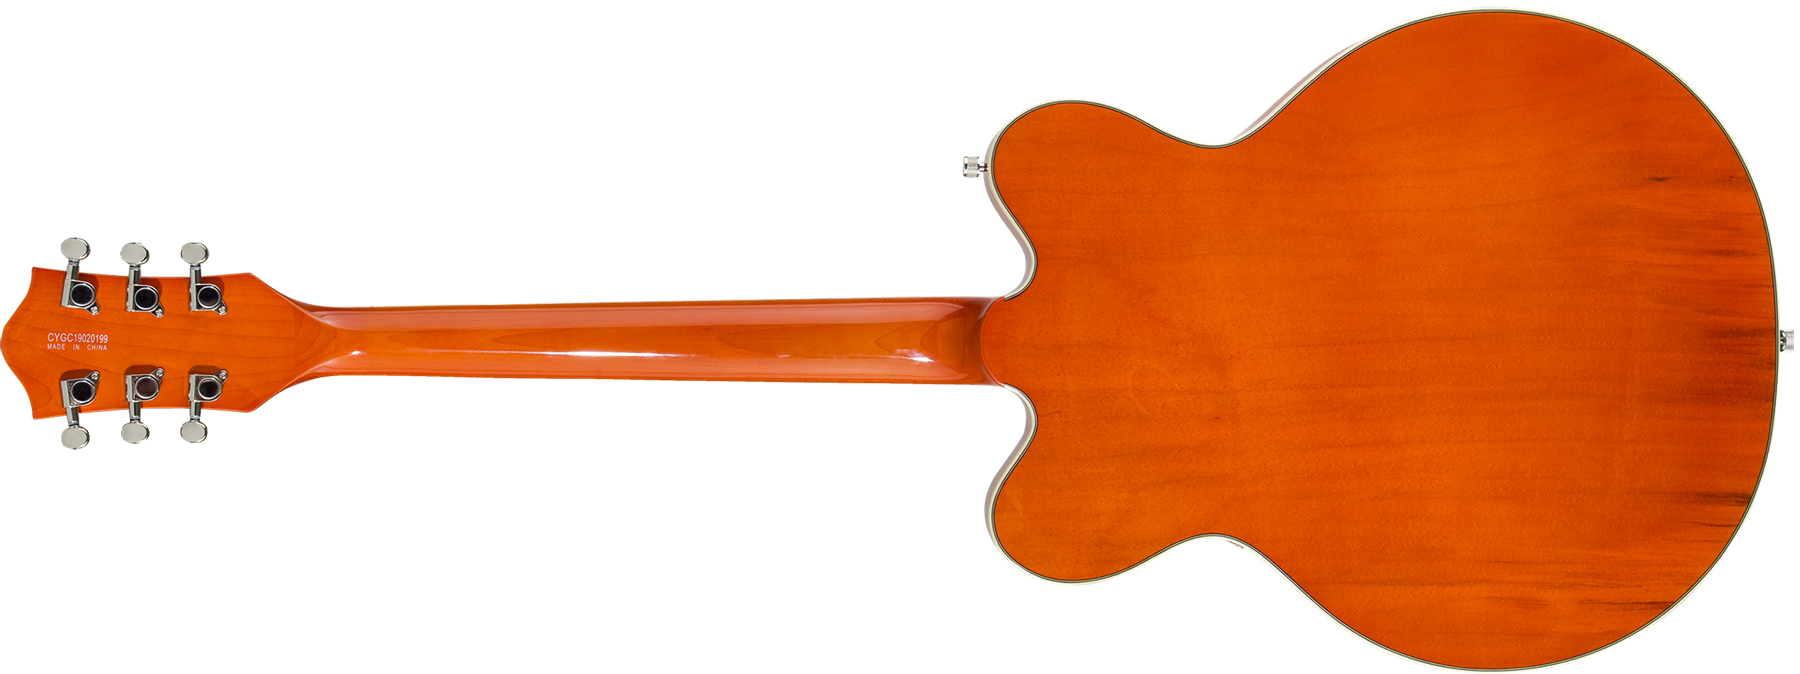 Gretsch G5622t Center Bloc Double Cut Bigsby Electromatic 2019 Hh Lau - Orange Stain - Semi hollow elektriche gitaar - Variation 1